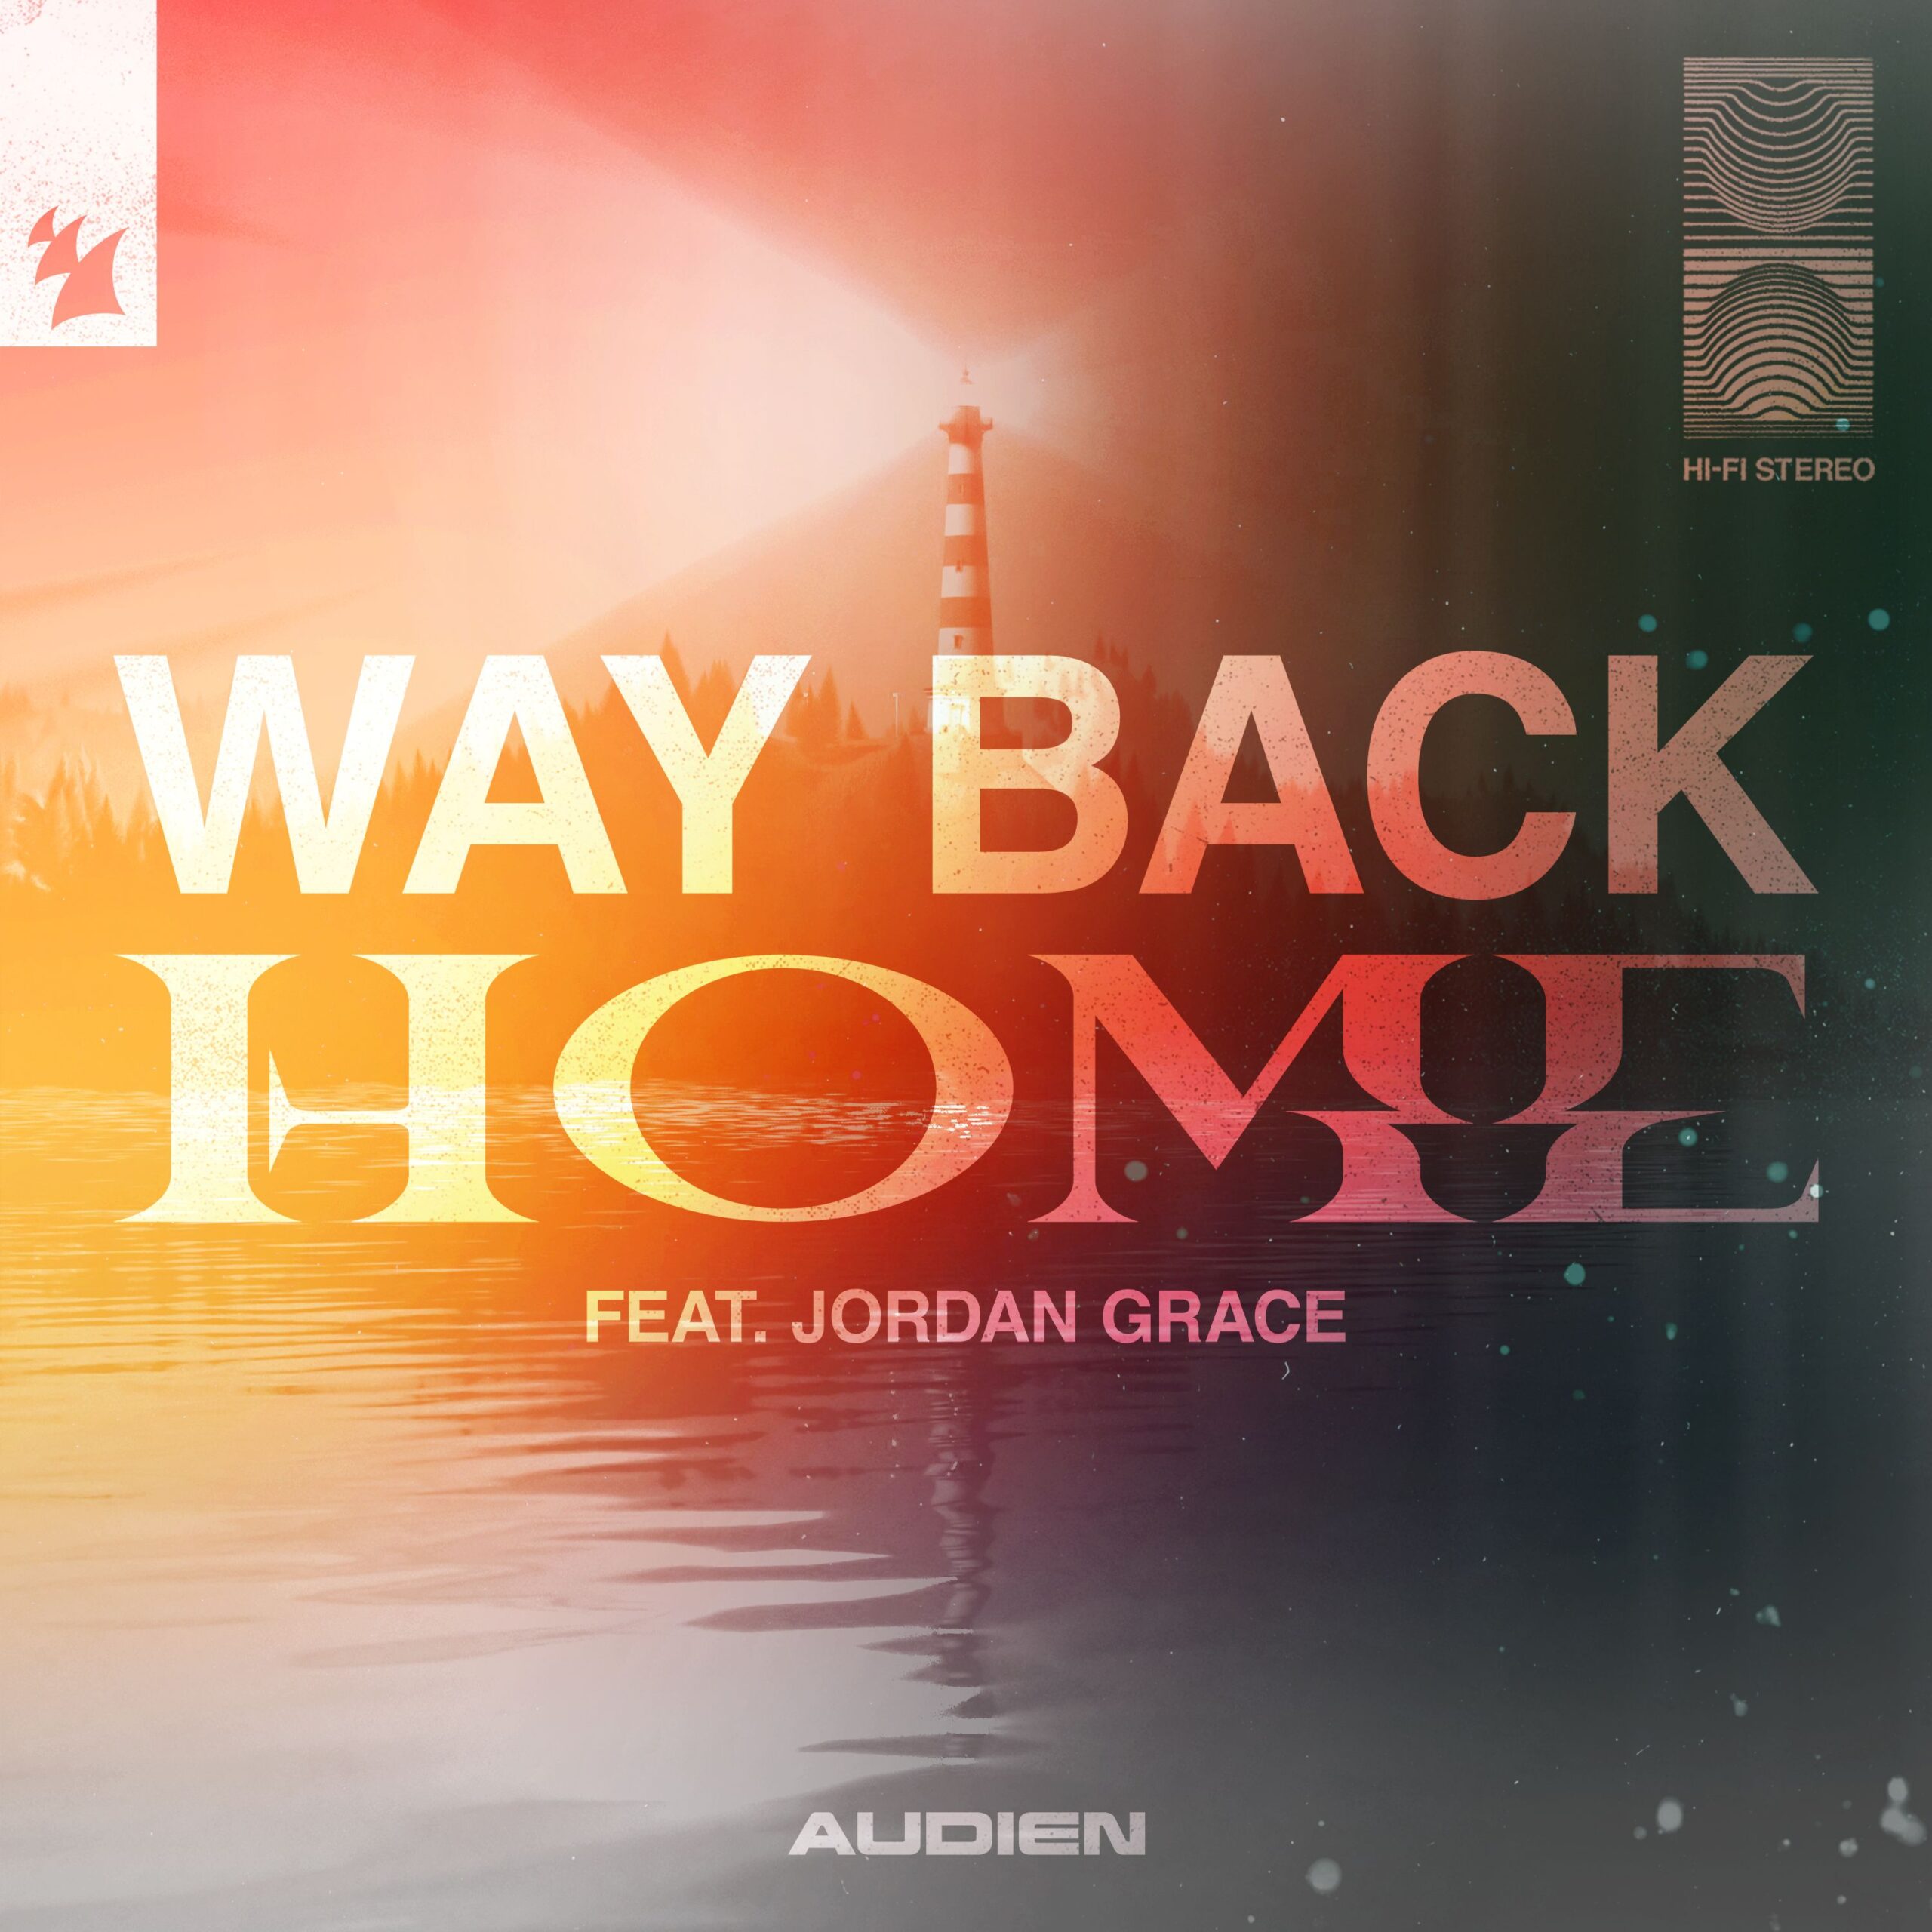 Audien feat. Jordan Grace presents Way Back Home on Armada Music